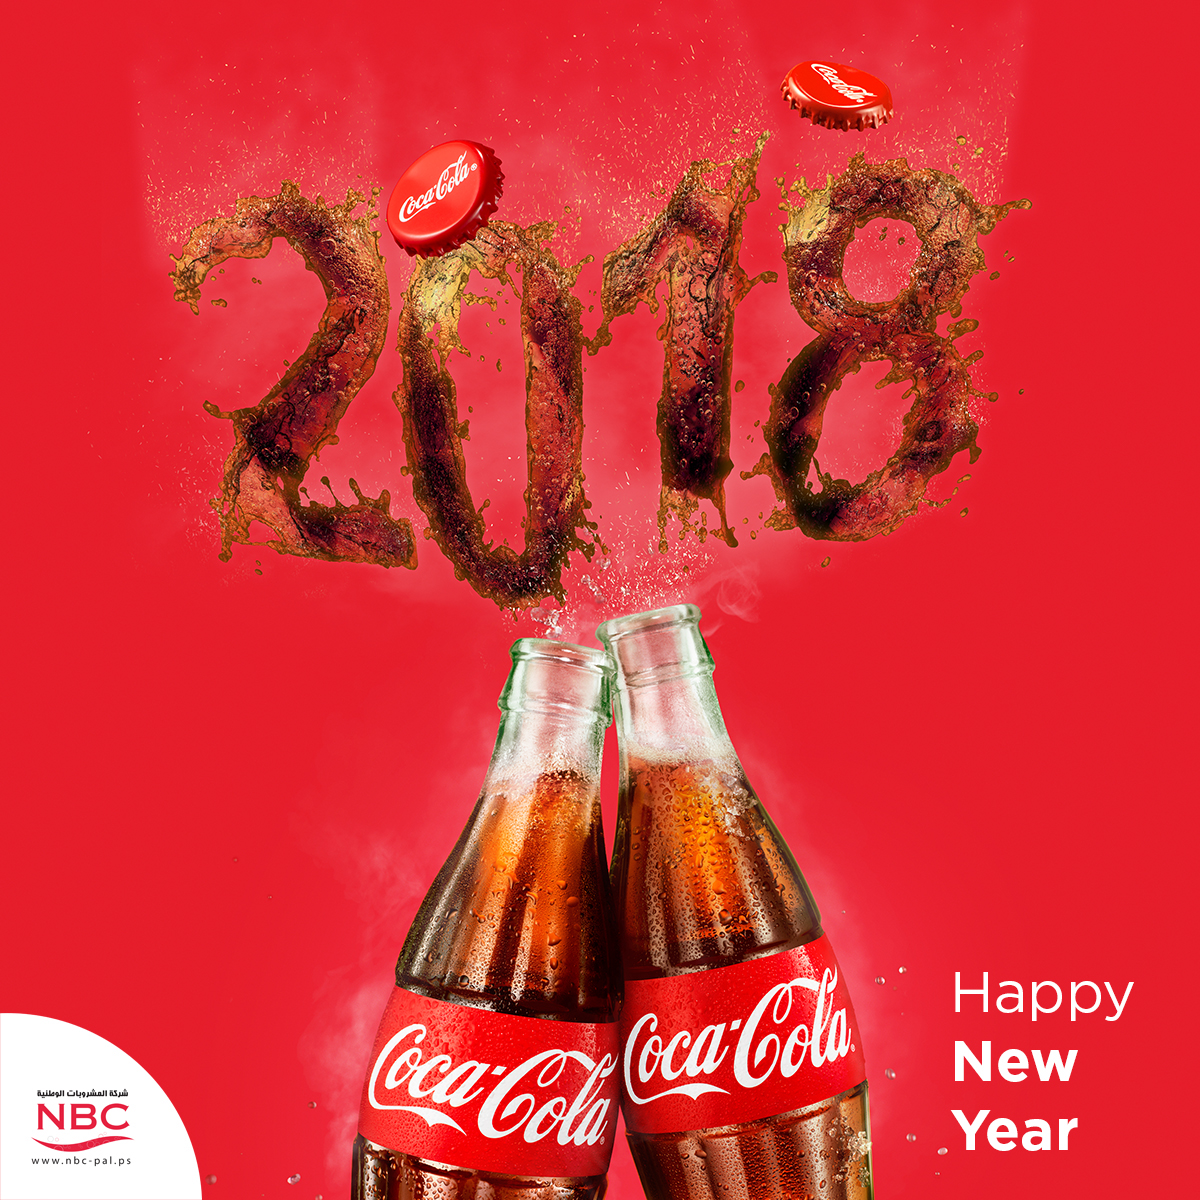 cocacola happy new year 2018 year nbc cocacola palestine